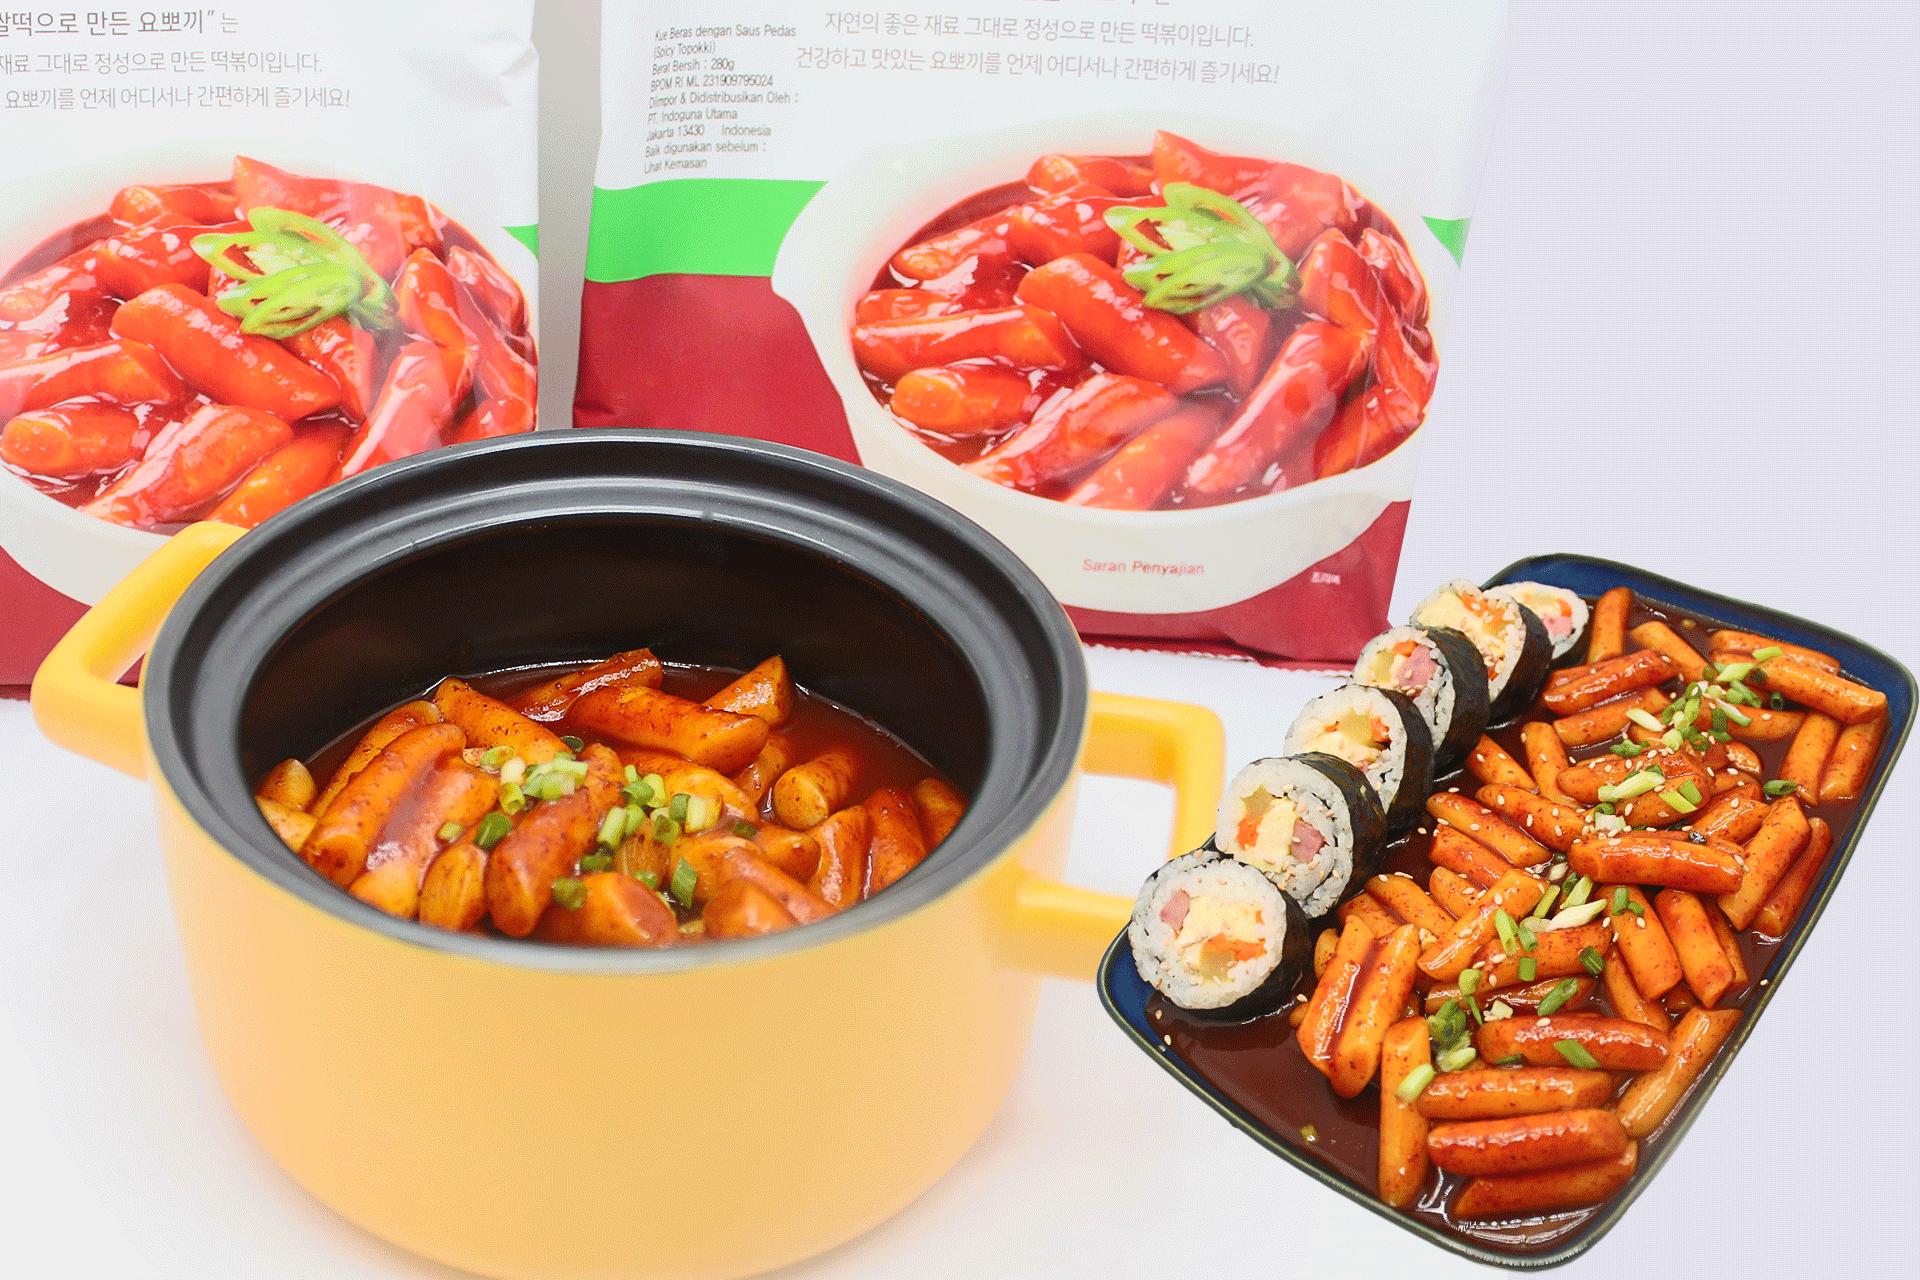 yopokki best combination tteokbokki and kimbap Halal hot spicy tteokbokki Korean street snack